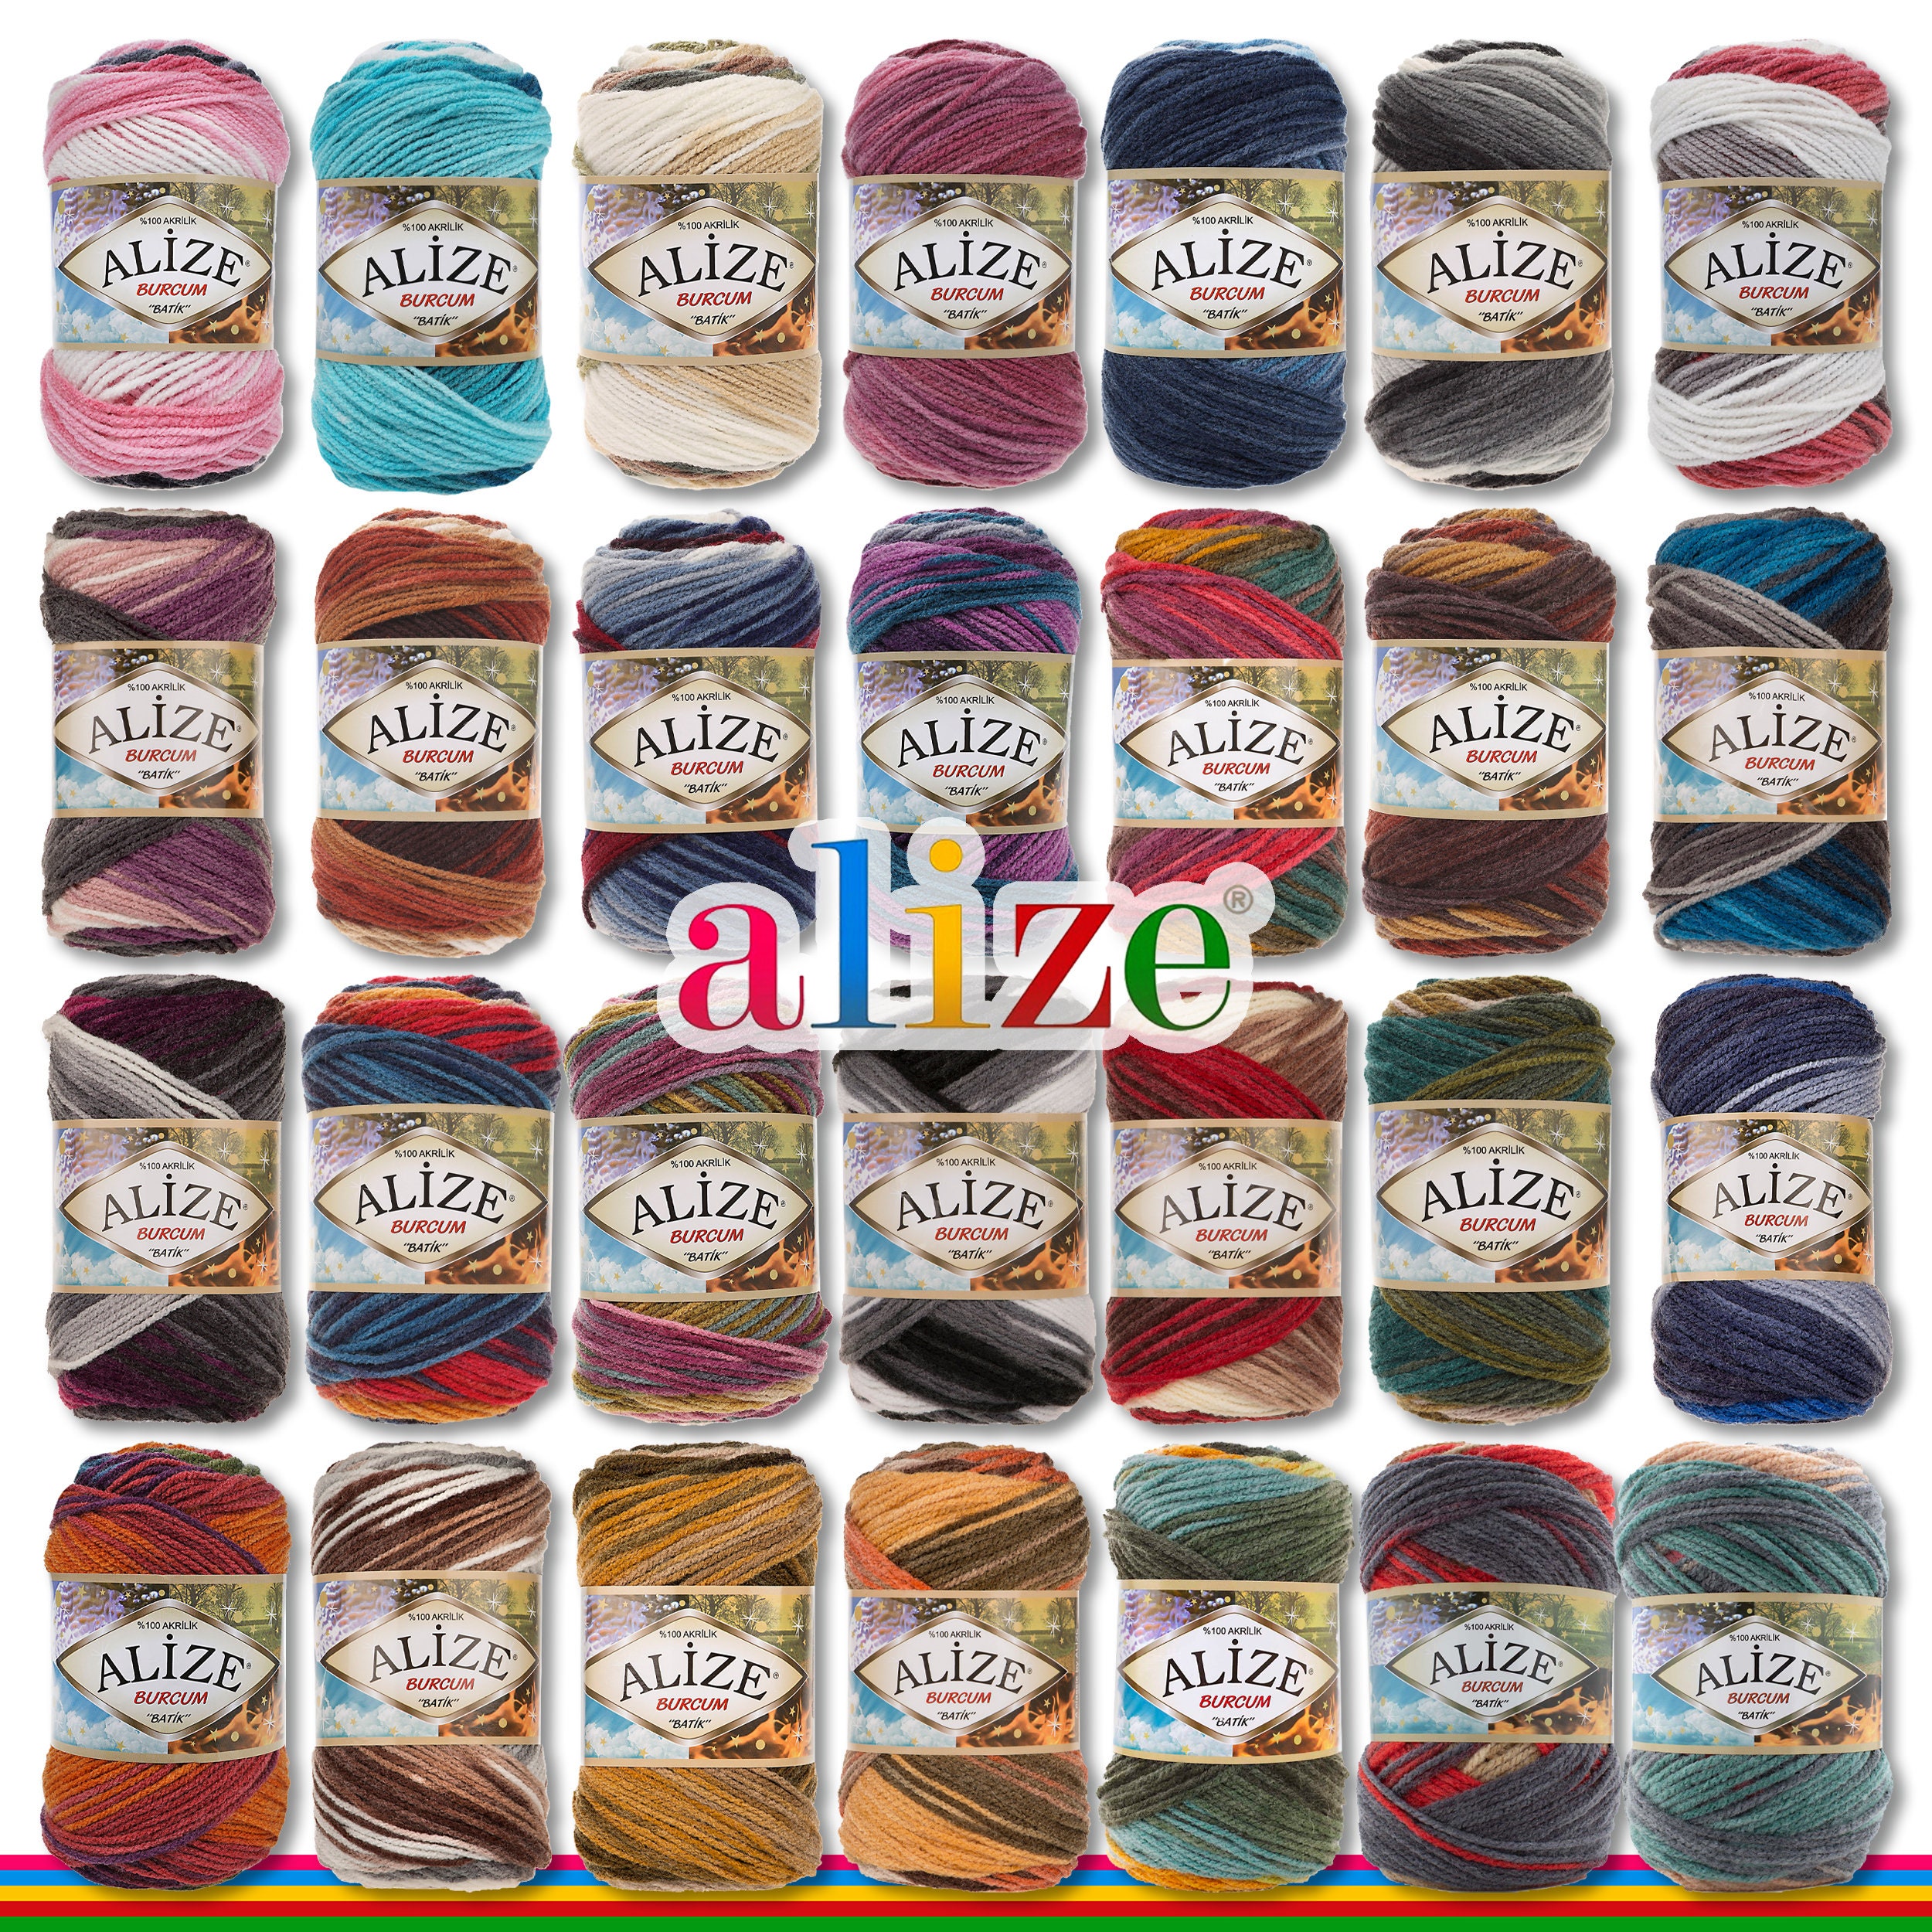 Alize Burcum wool SOFT Yarn 100gm balls 210m knitting crochet wools 10 ply NEW 